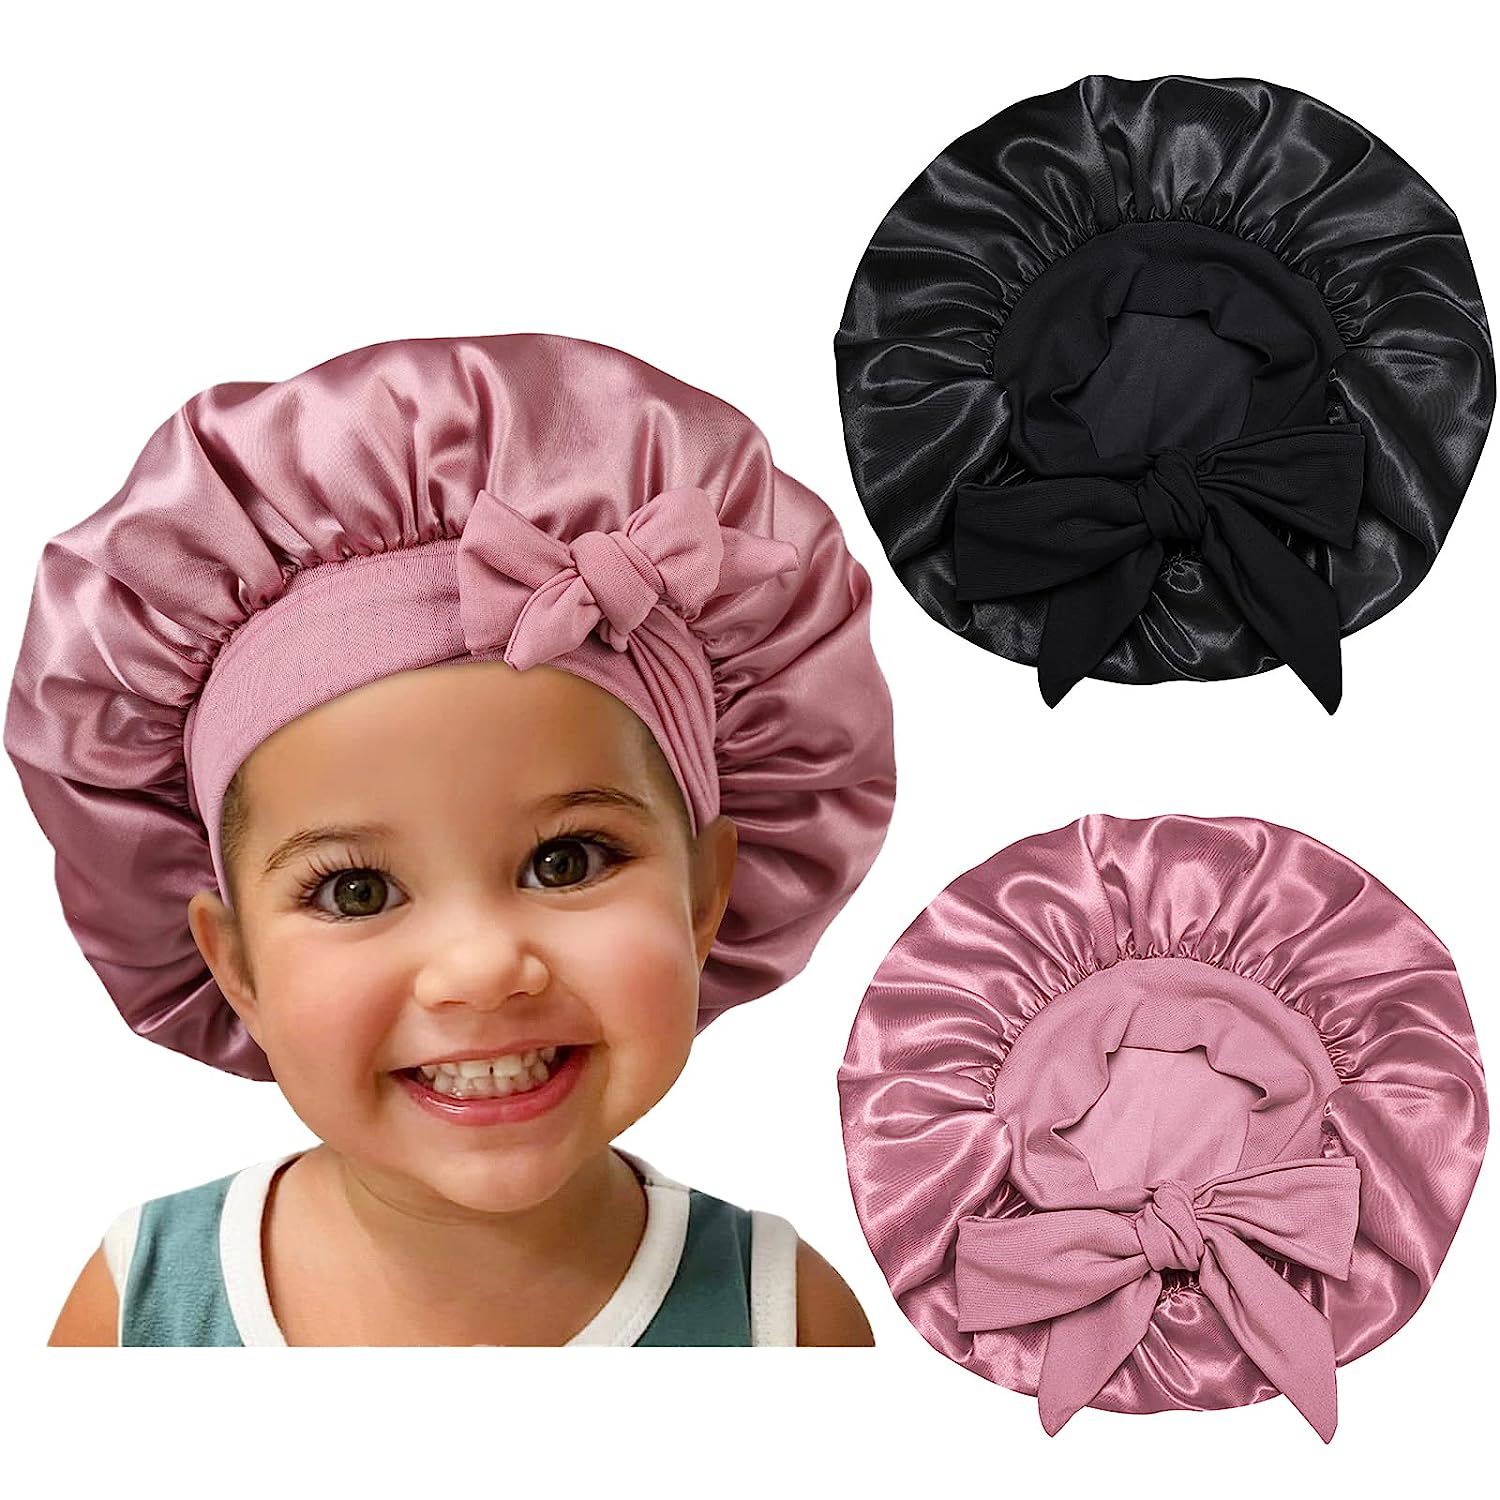 Satin Silk Bonnet Hair Cap For Kids with Elastic Tie Band 